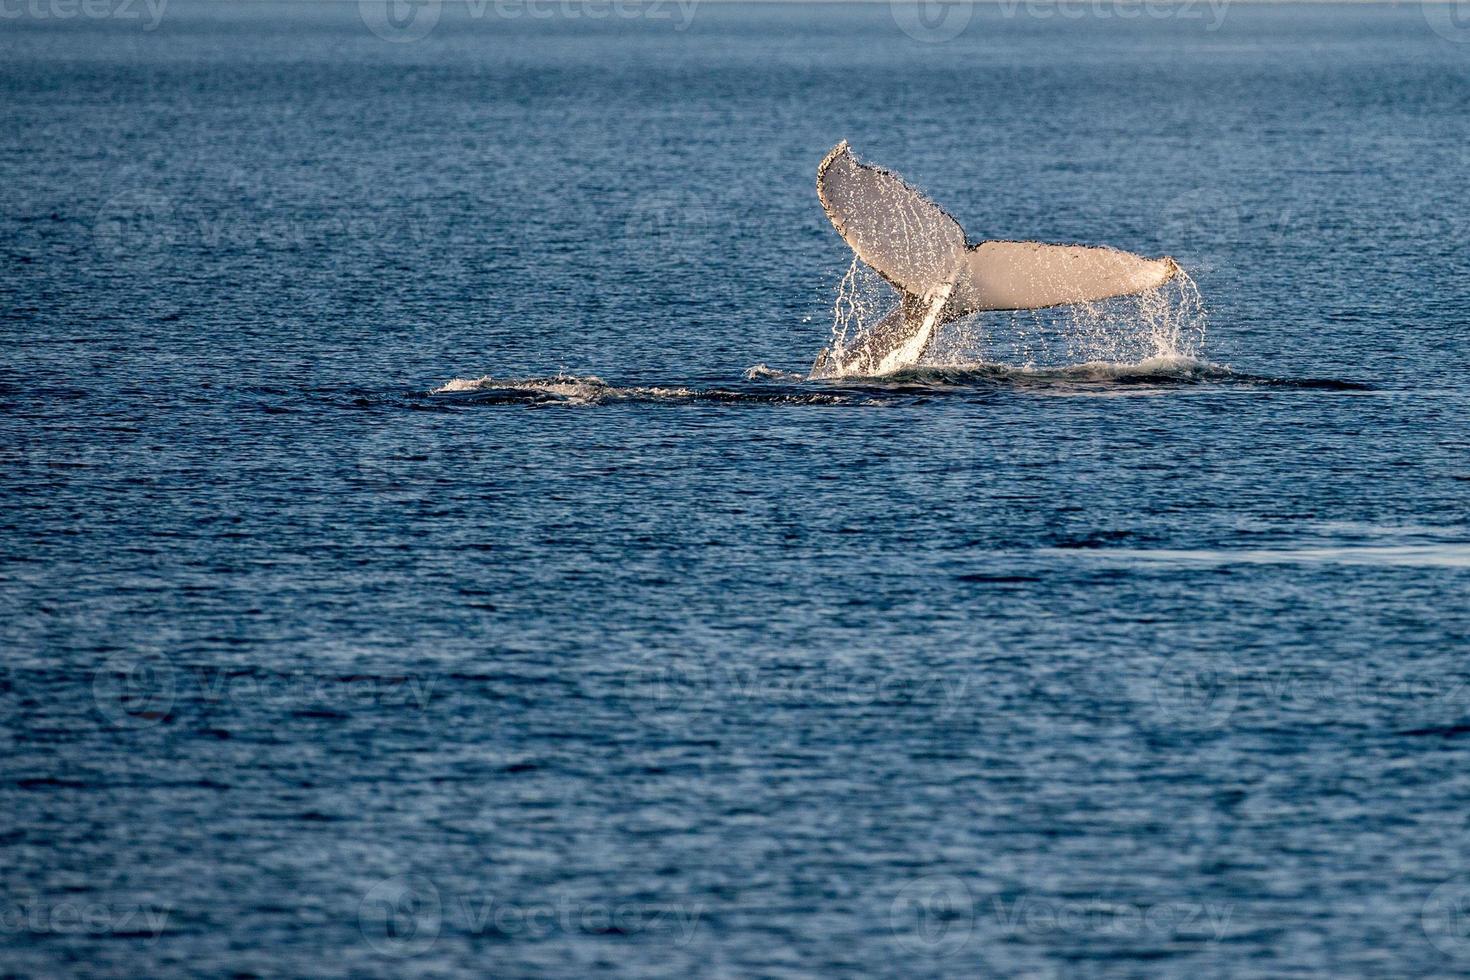 Humpback whales swimming in Australia photo